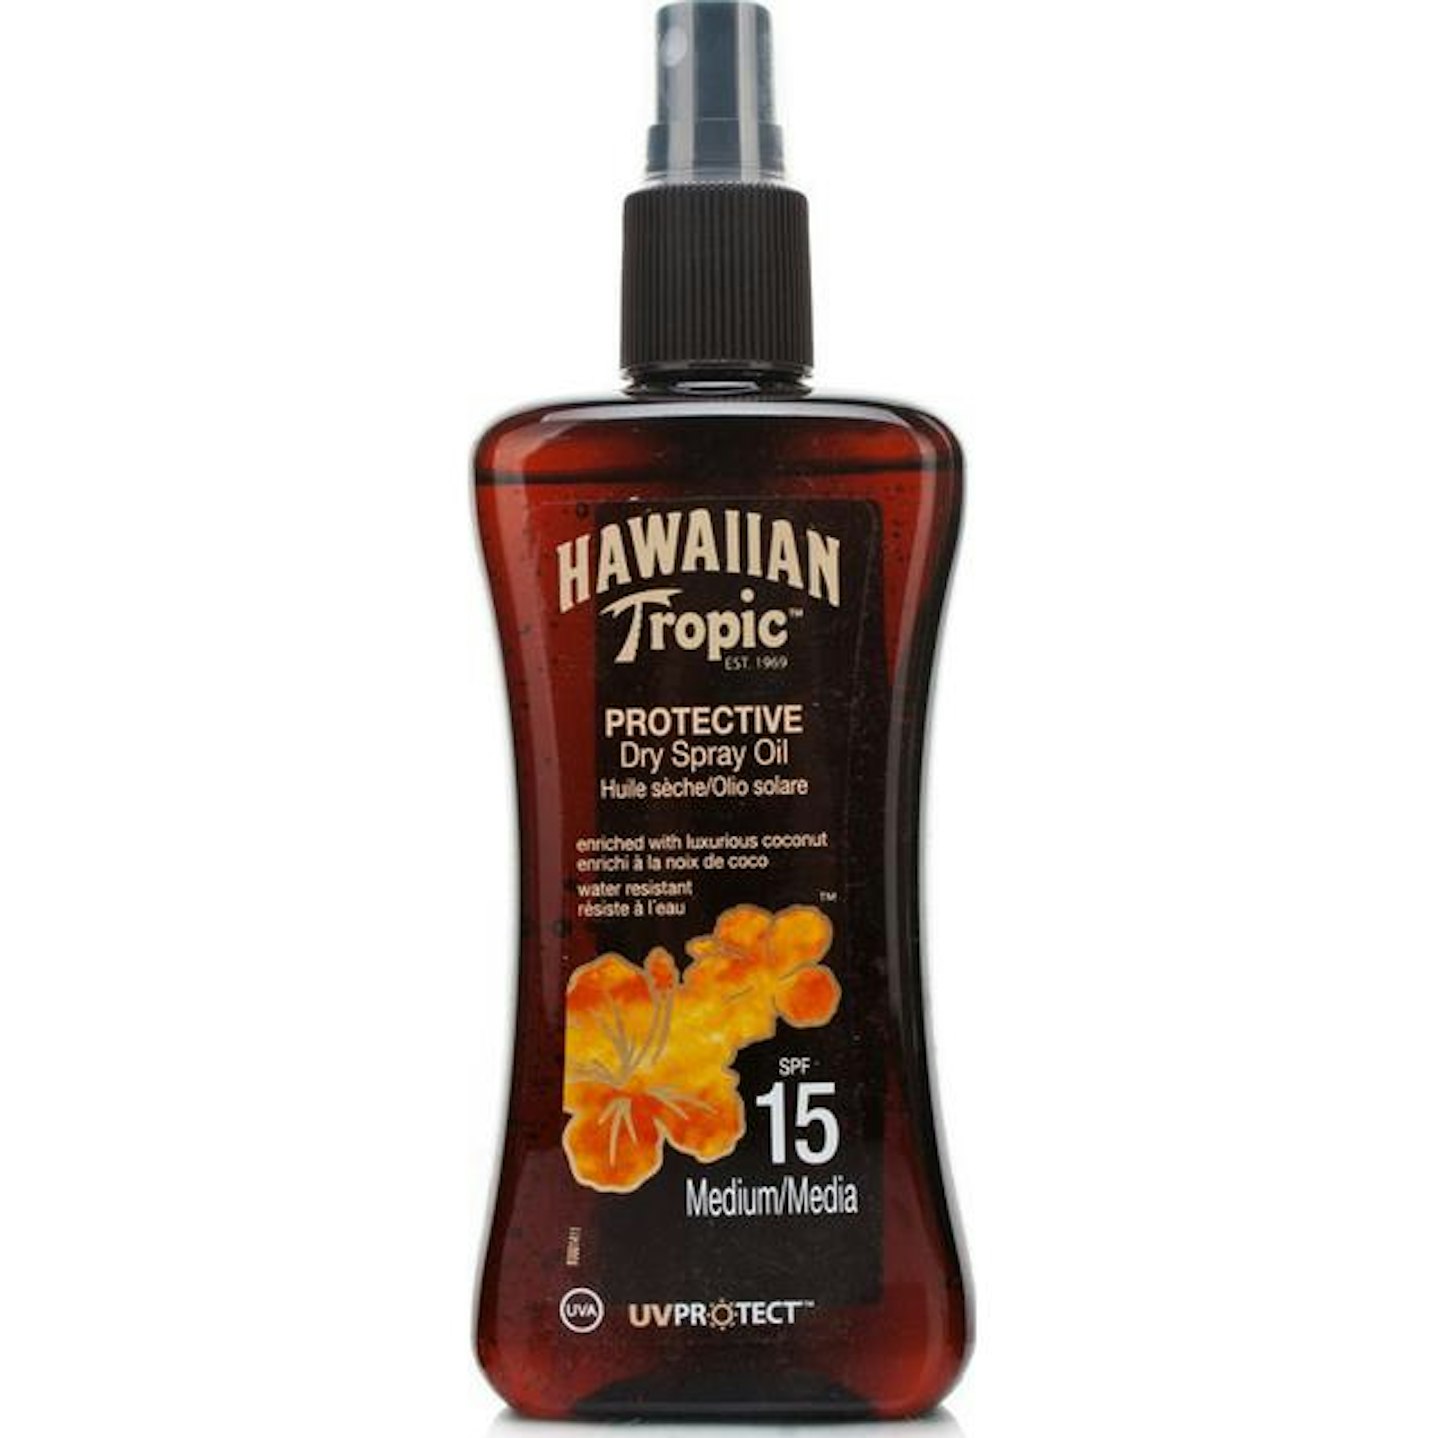 Hawaiian Tropic Protective Dry Oil SPF 15, £6.49